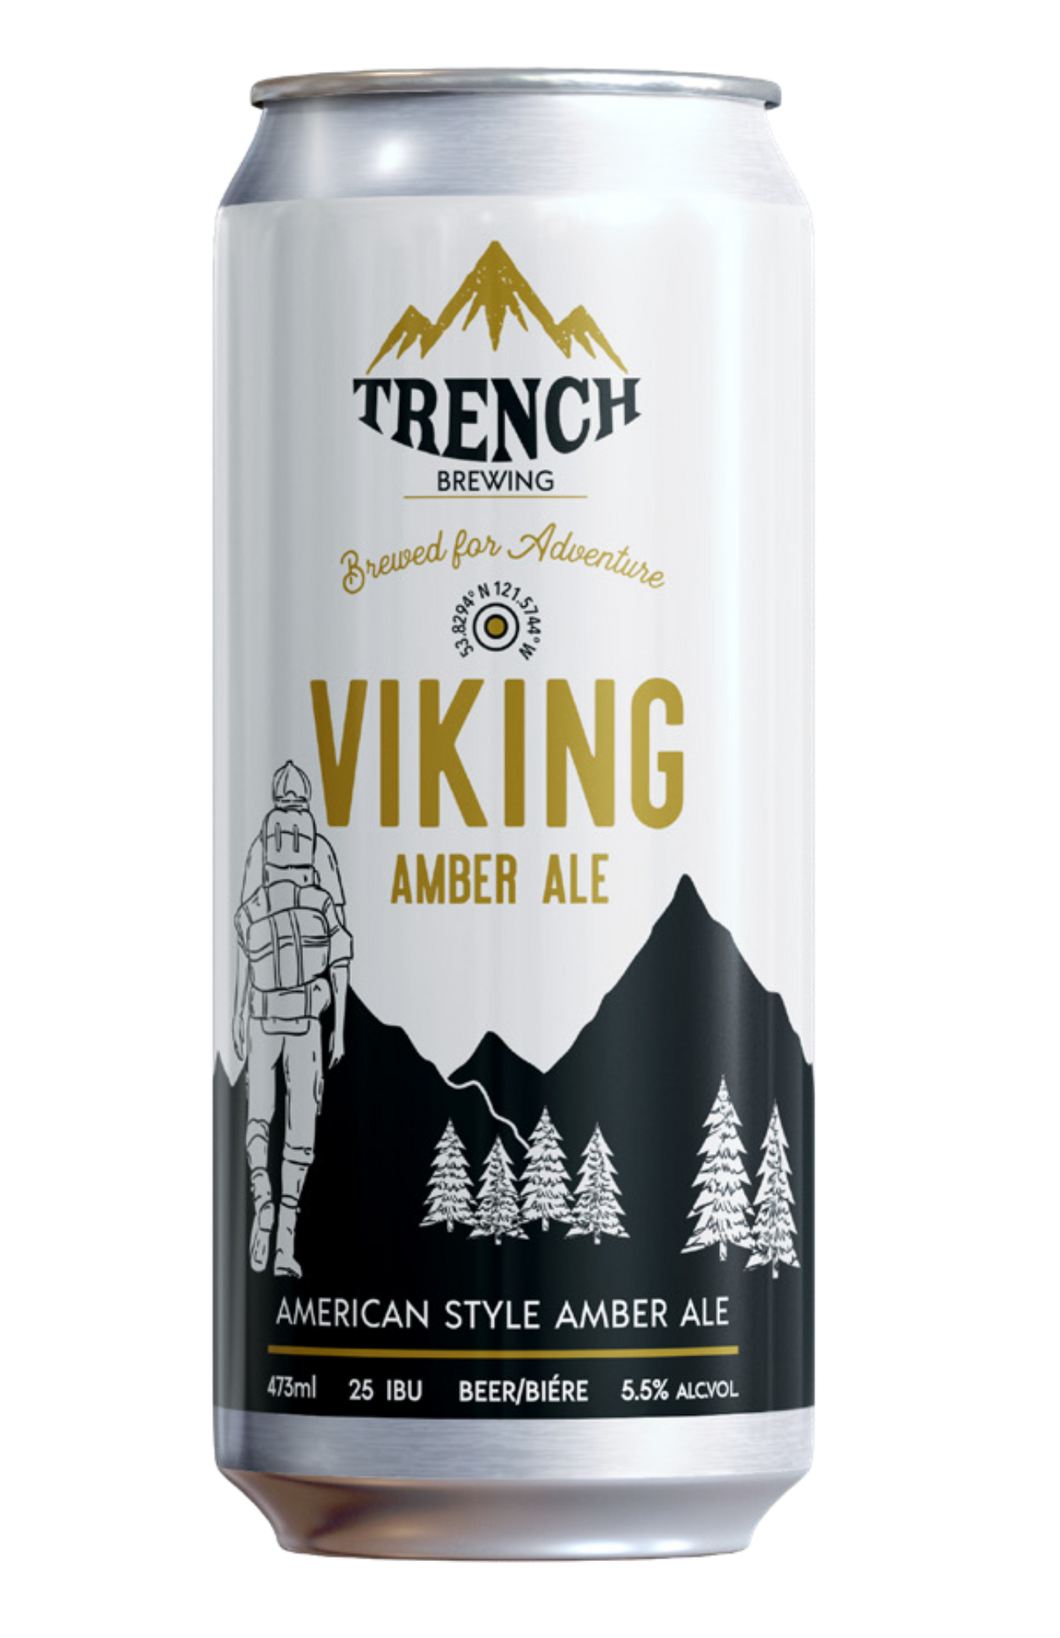 Viking Amber Ale